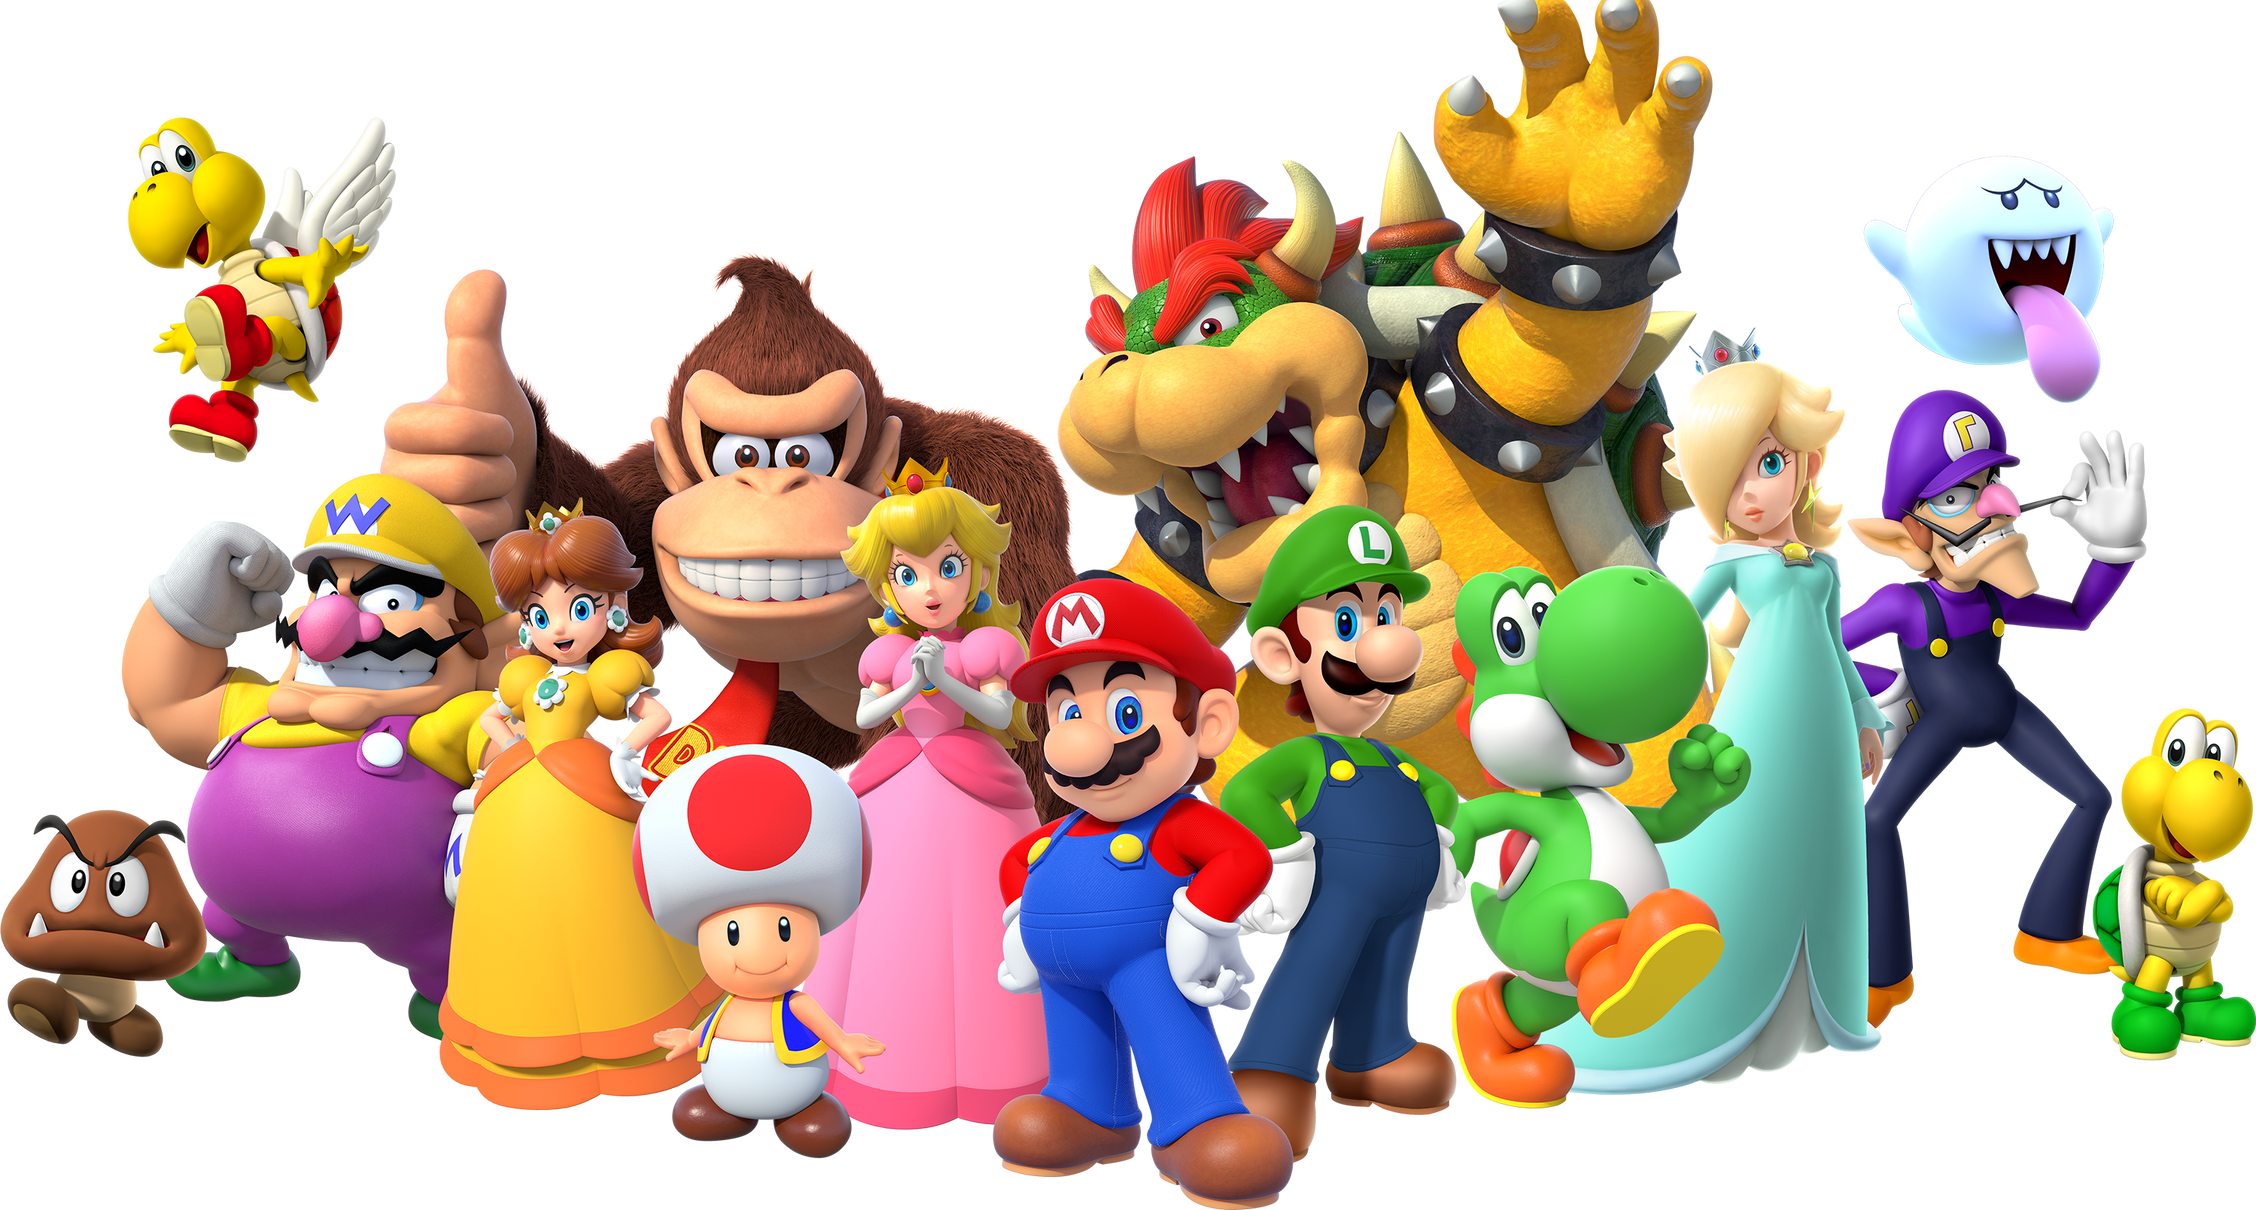 Image: Nintendo - Mario and Mario characters 